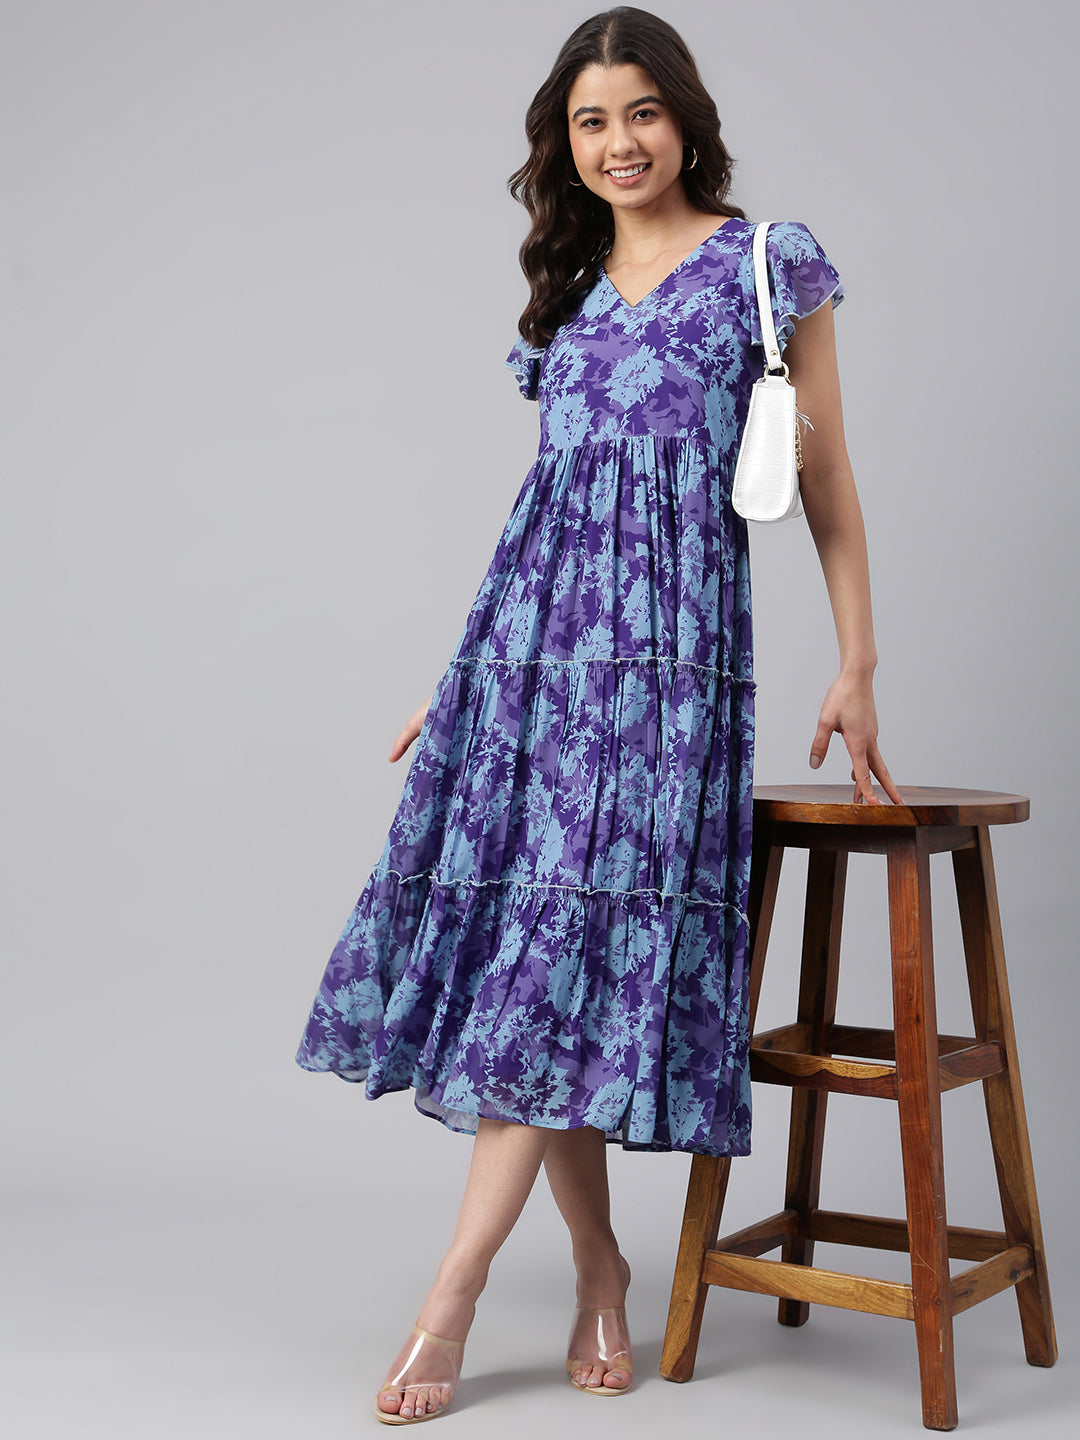 Blue Georgette Printed Flared Western Dress